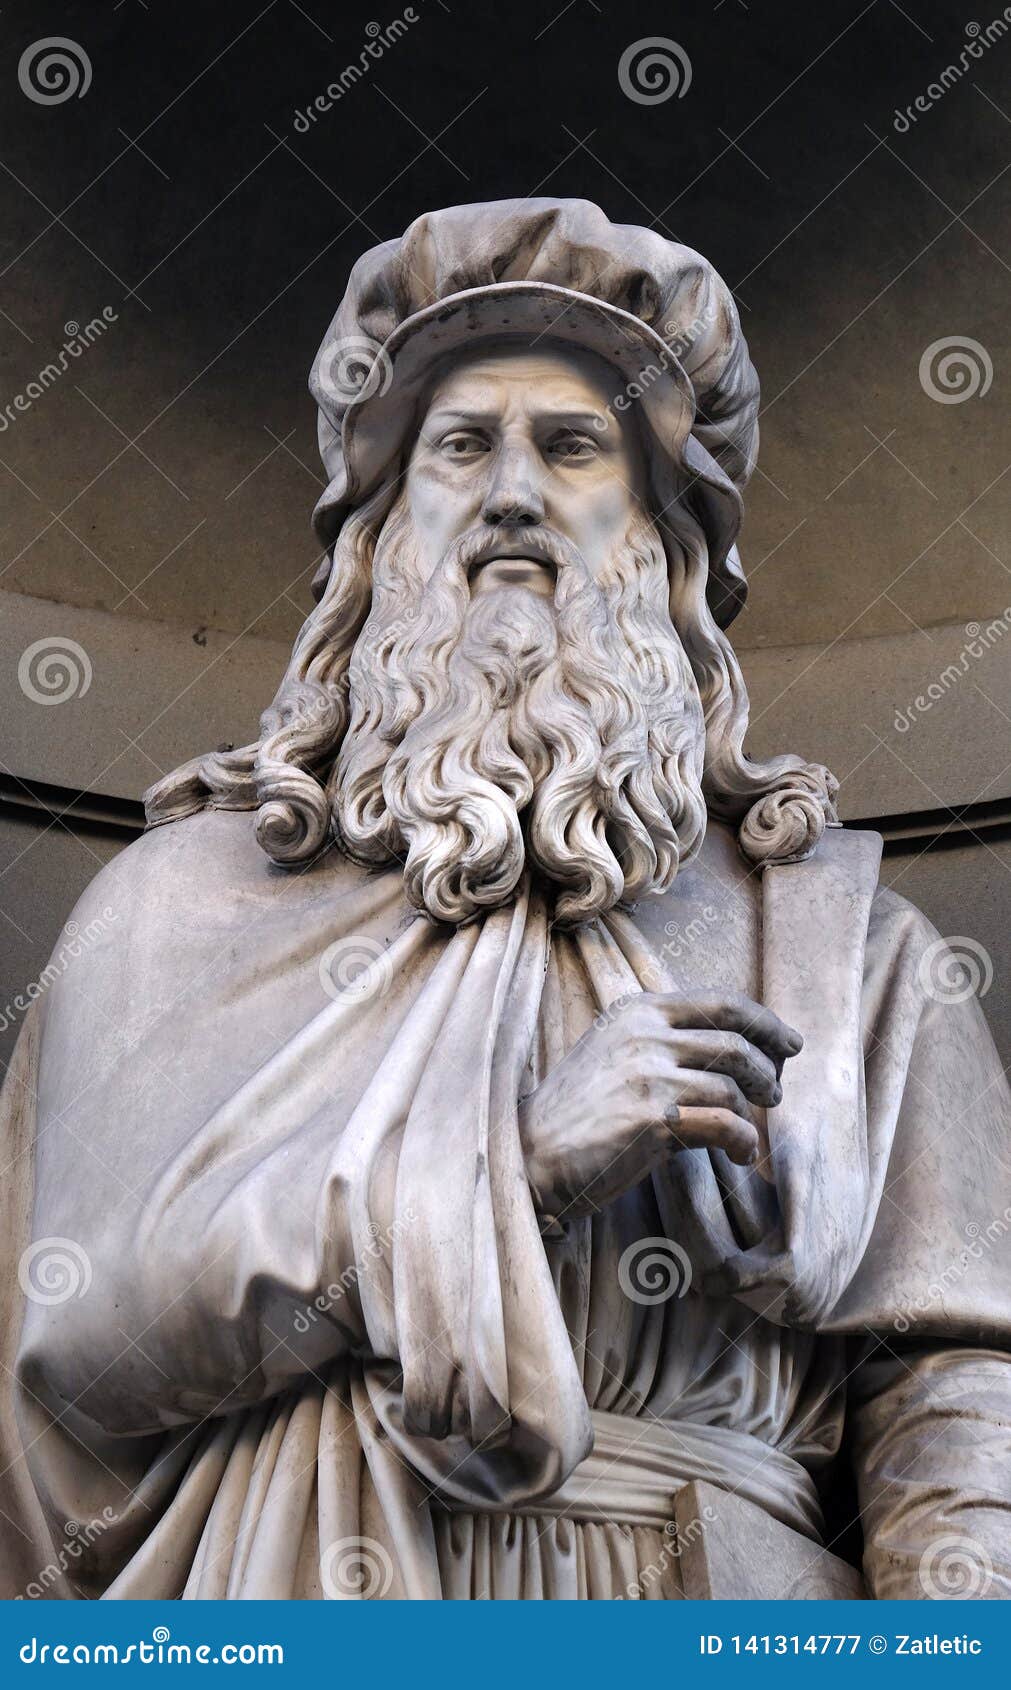 leonardo da vinci, statue in the niches of the uffizi colonnade in florence